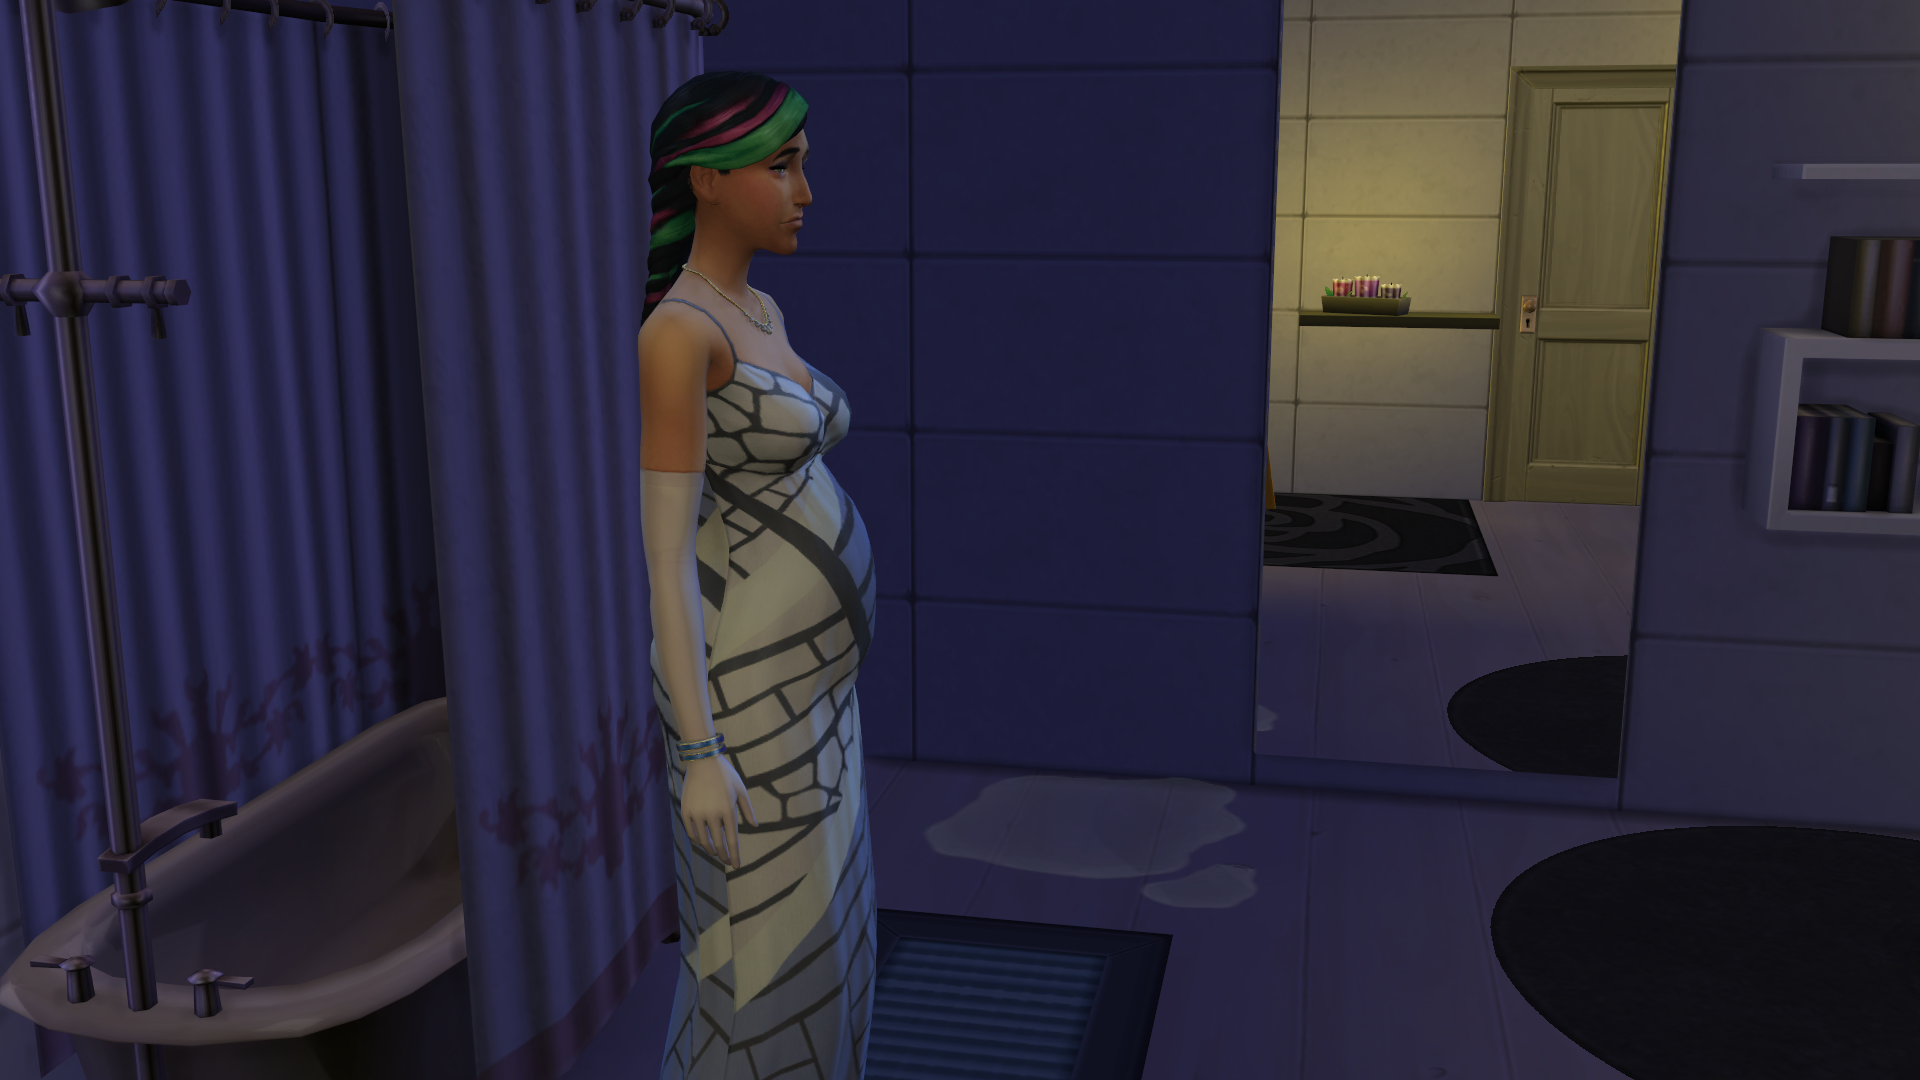 realistic pregnancy mod sims 4